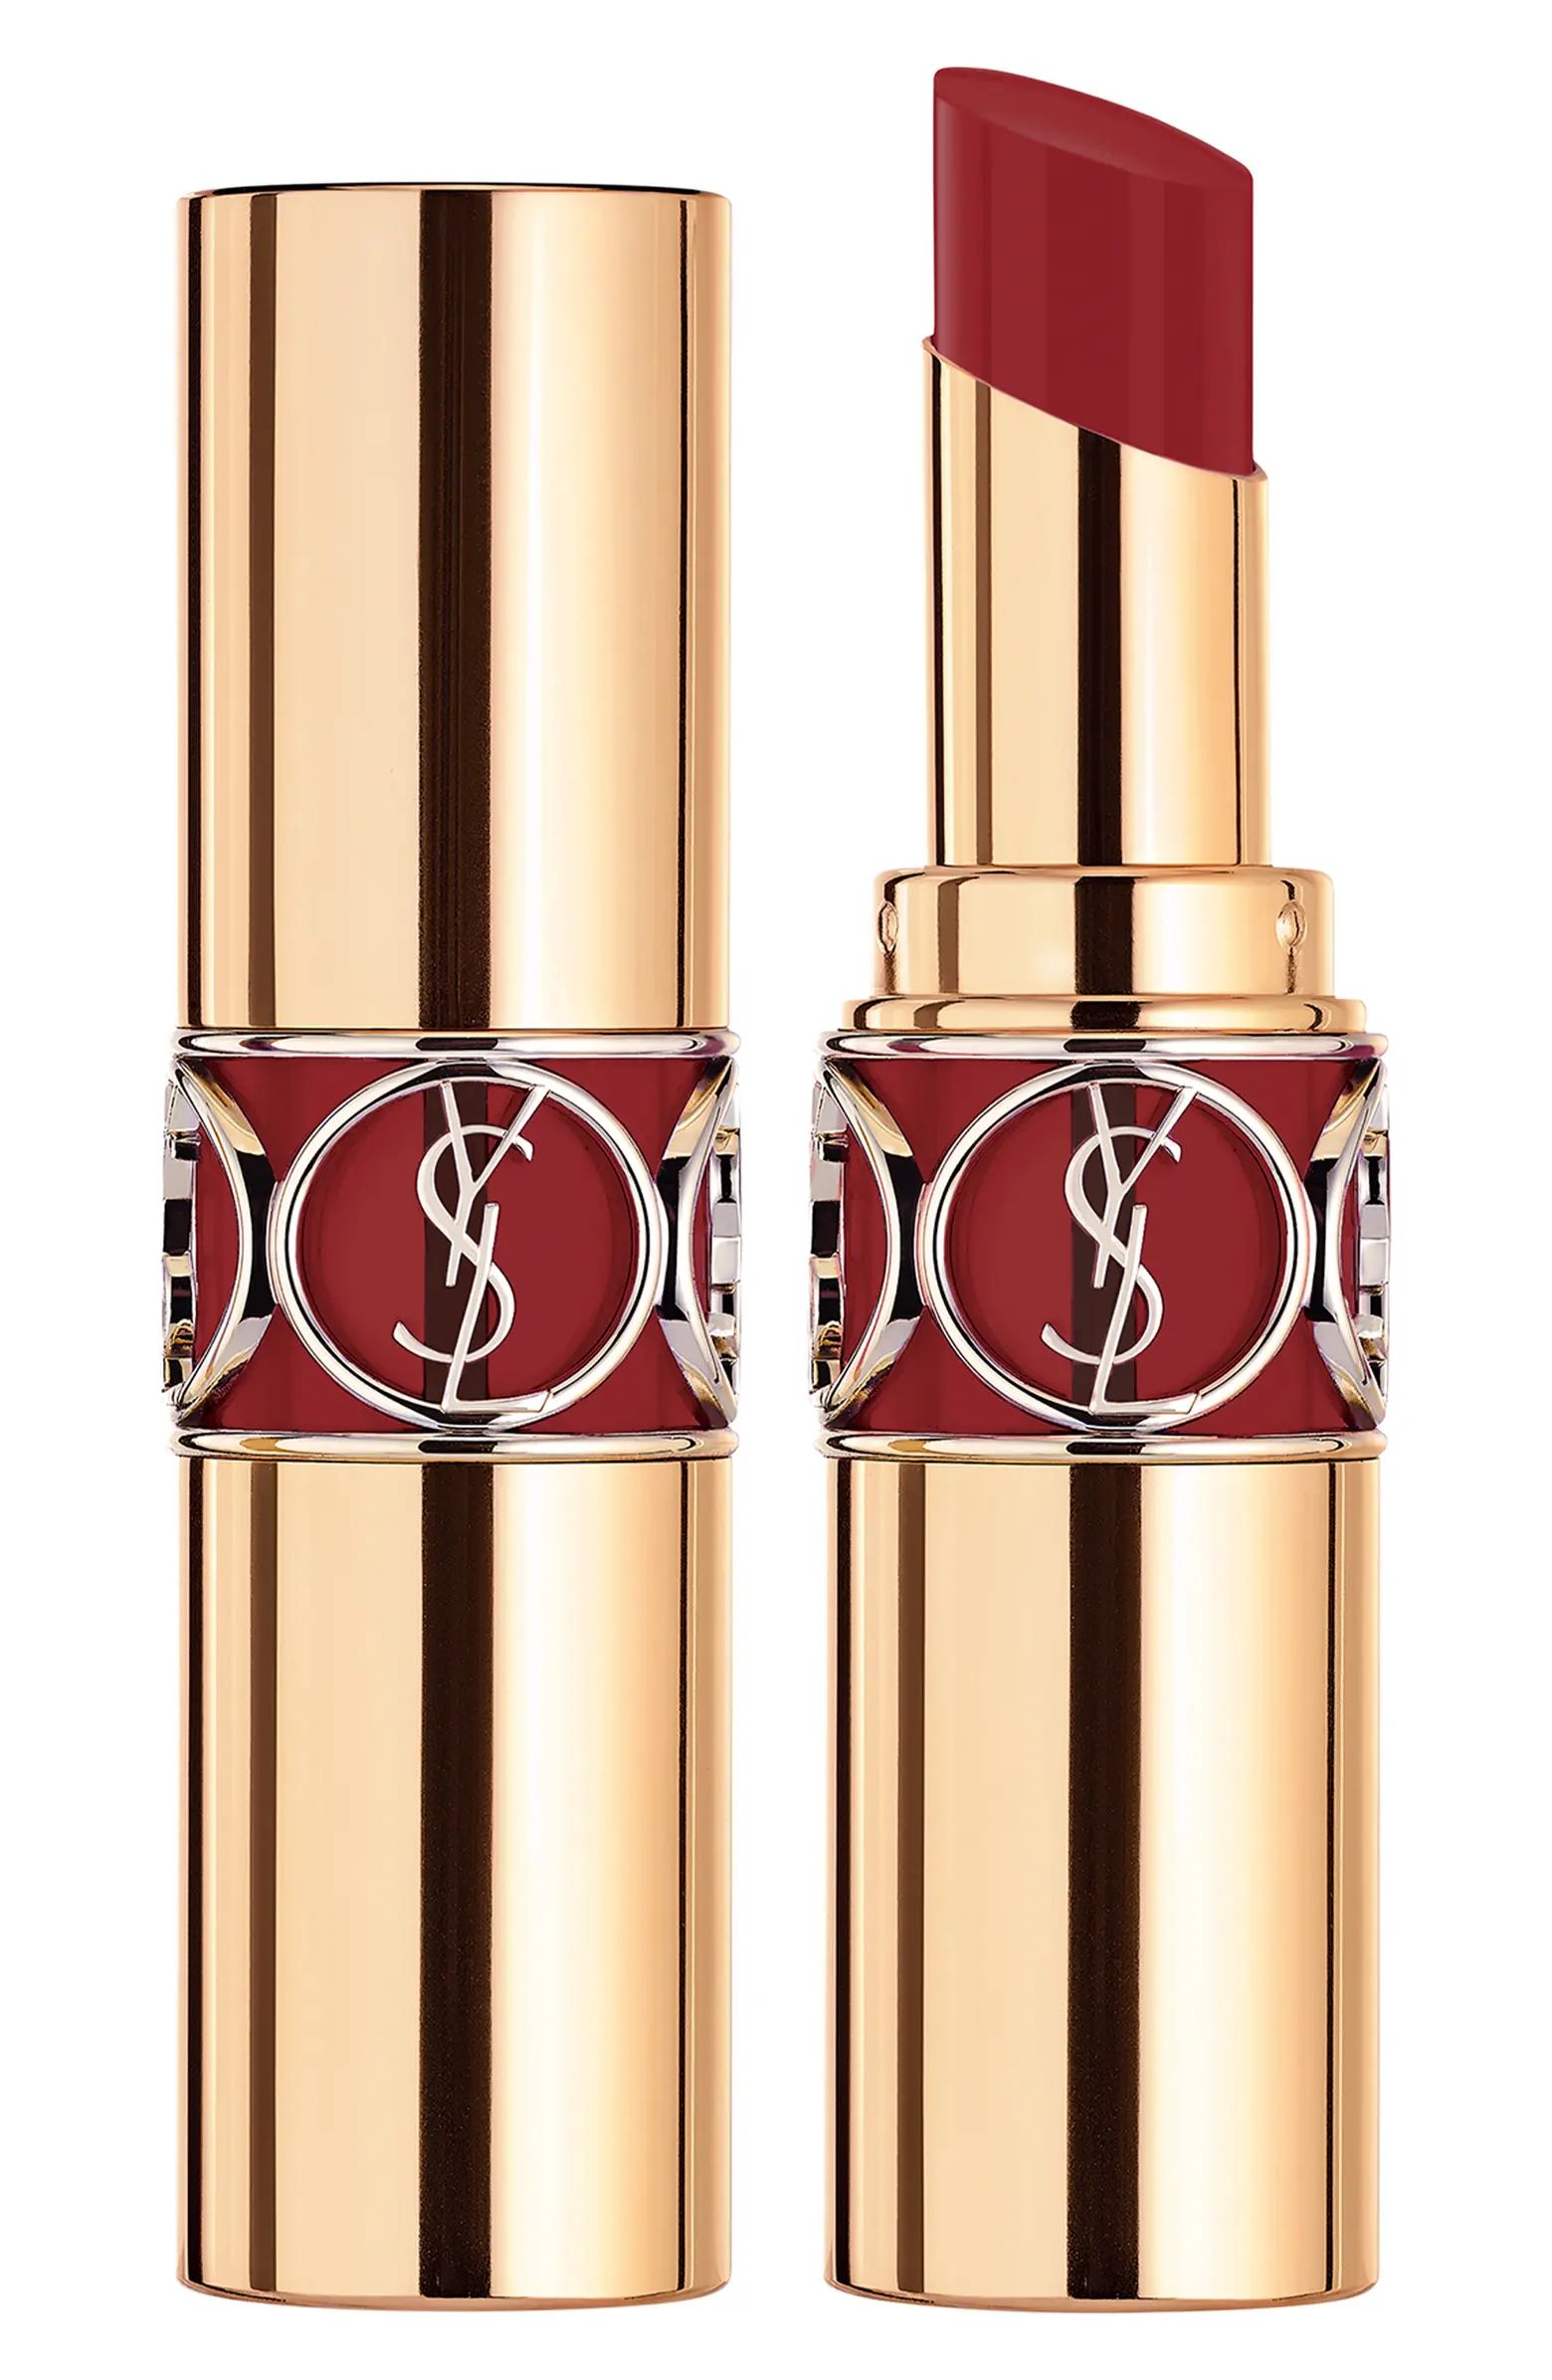 Rouge Volupté Shine Oil-in-Stick Lipstick Balm | Nordstrom